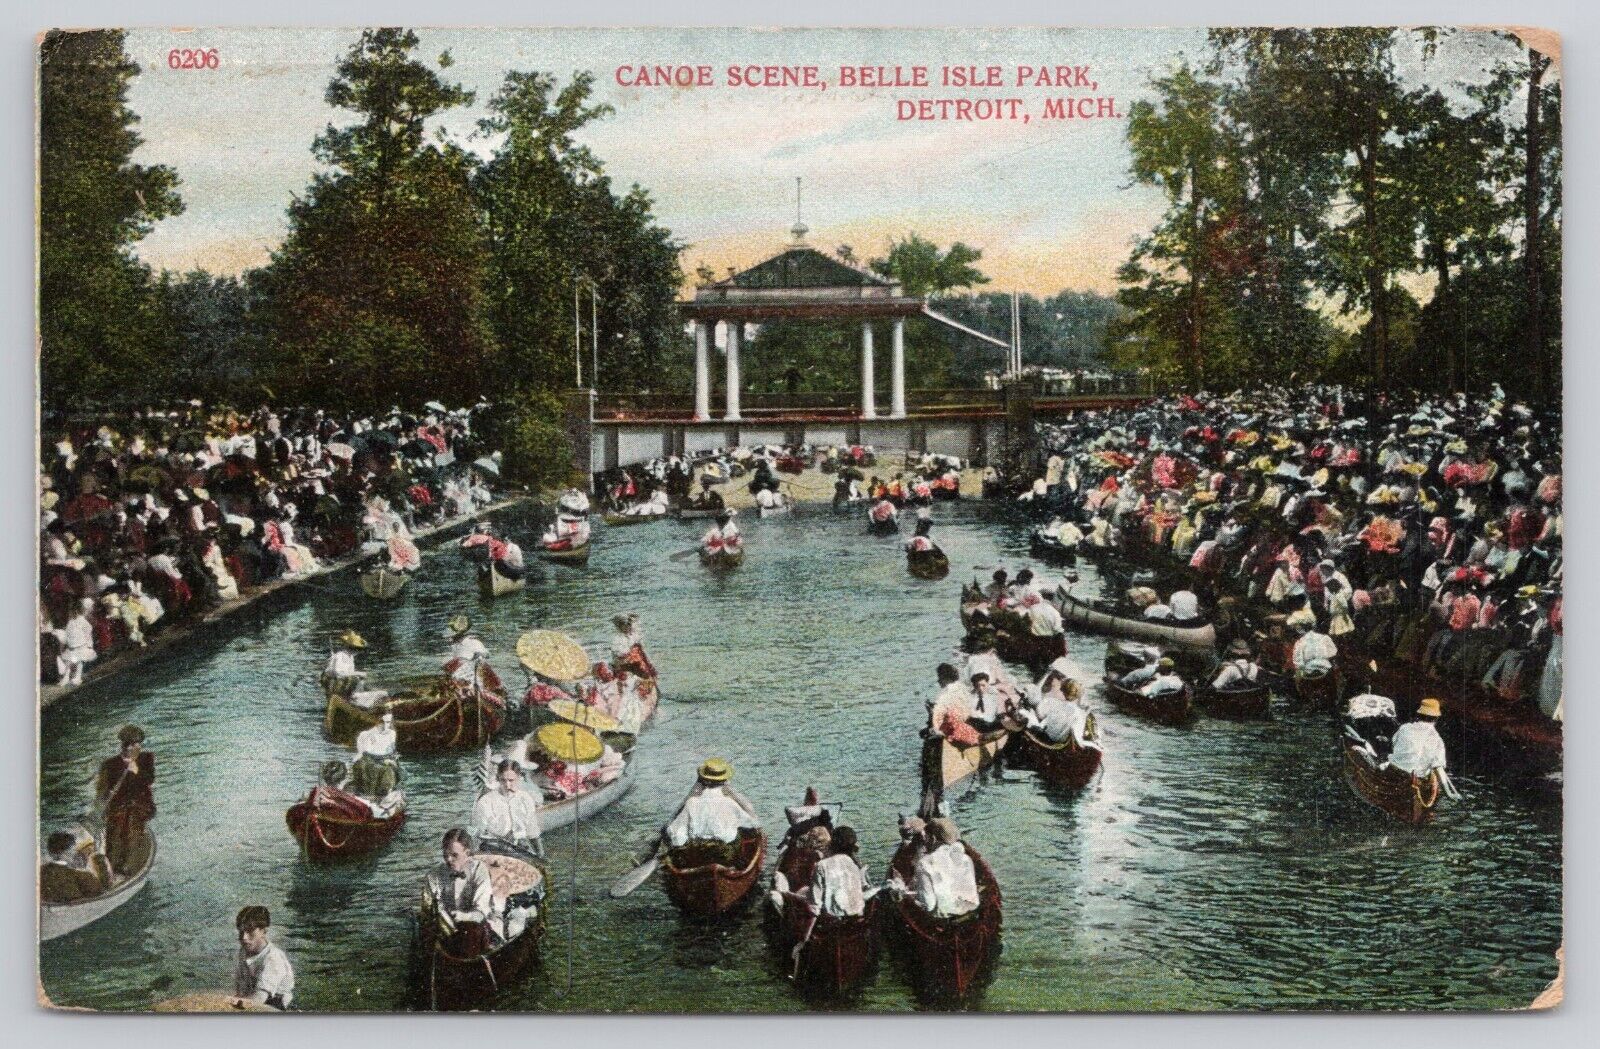 Canoe Scene Belle Isle Park Old Dress Attire Detroit Michigan 1909 Postcard